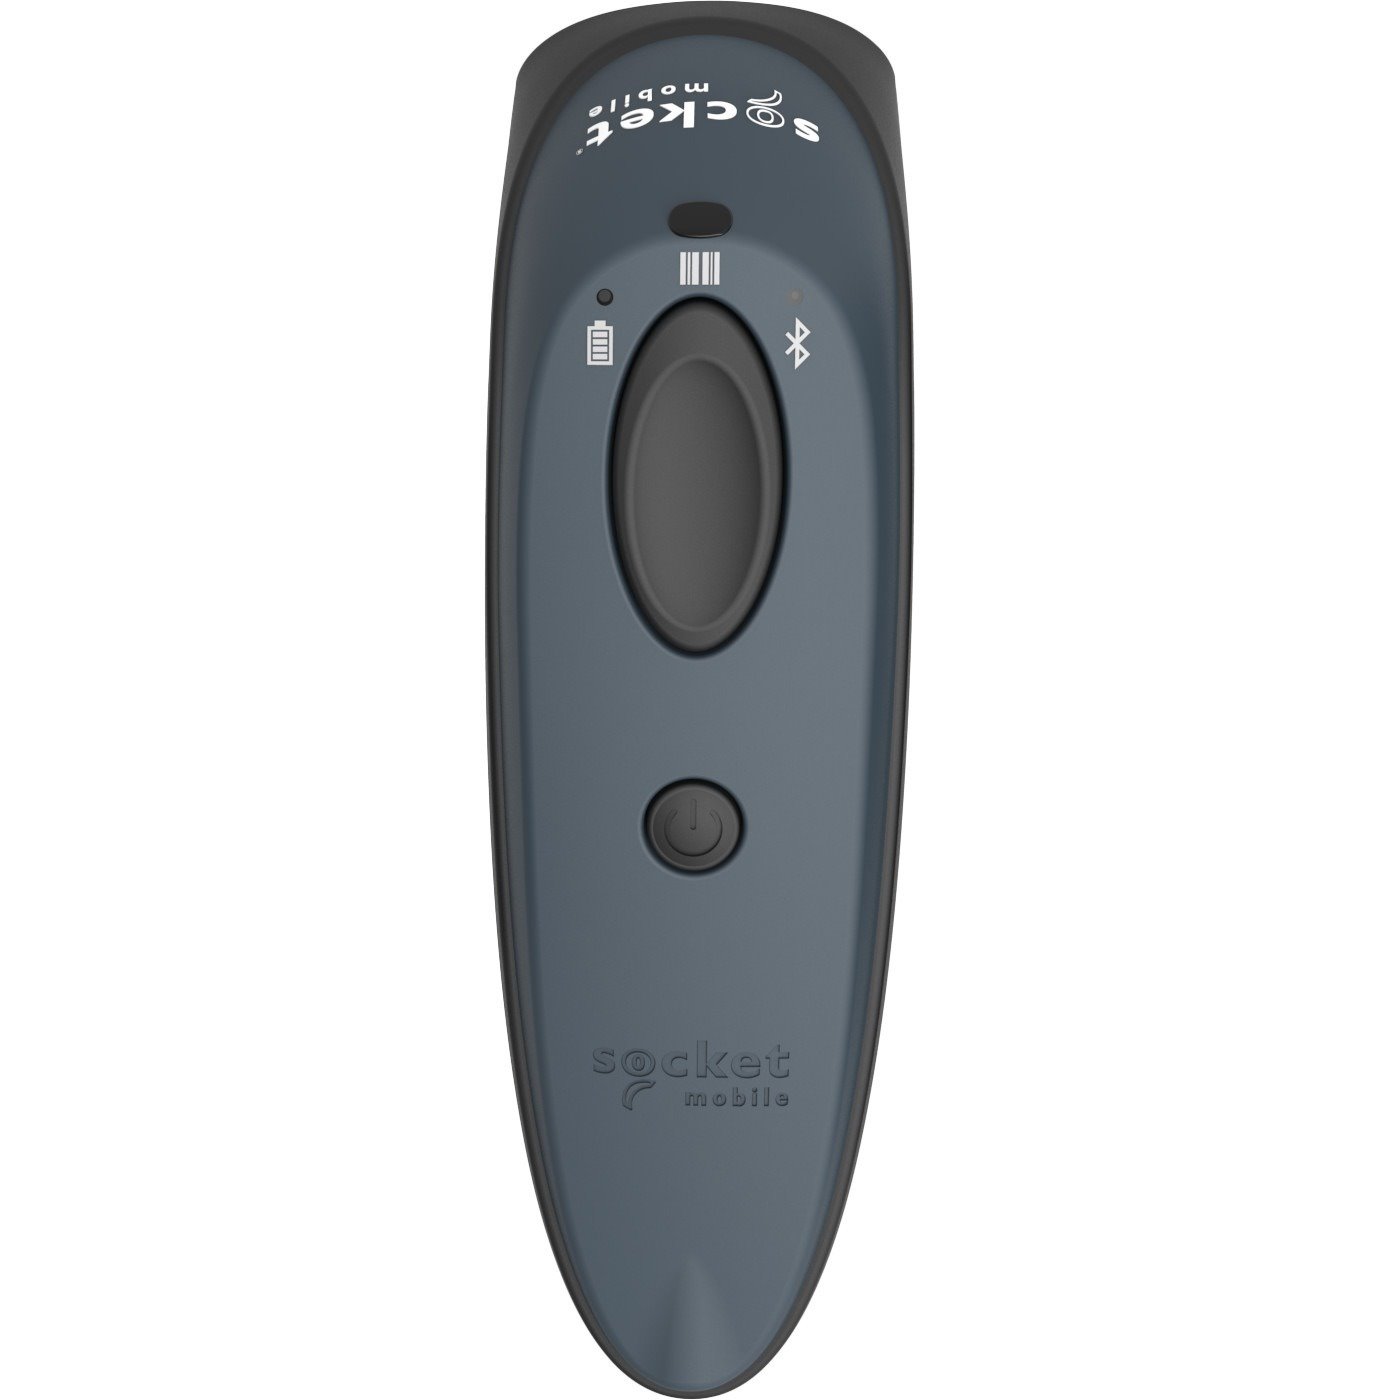 Socket Mobile DuraScan D760 Handheld Barcode Scanner - Wireless Connectivity - Grey